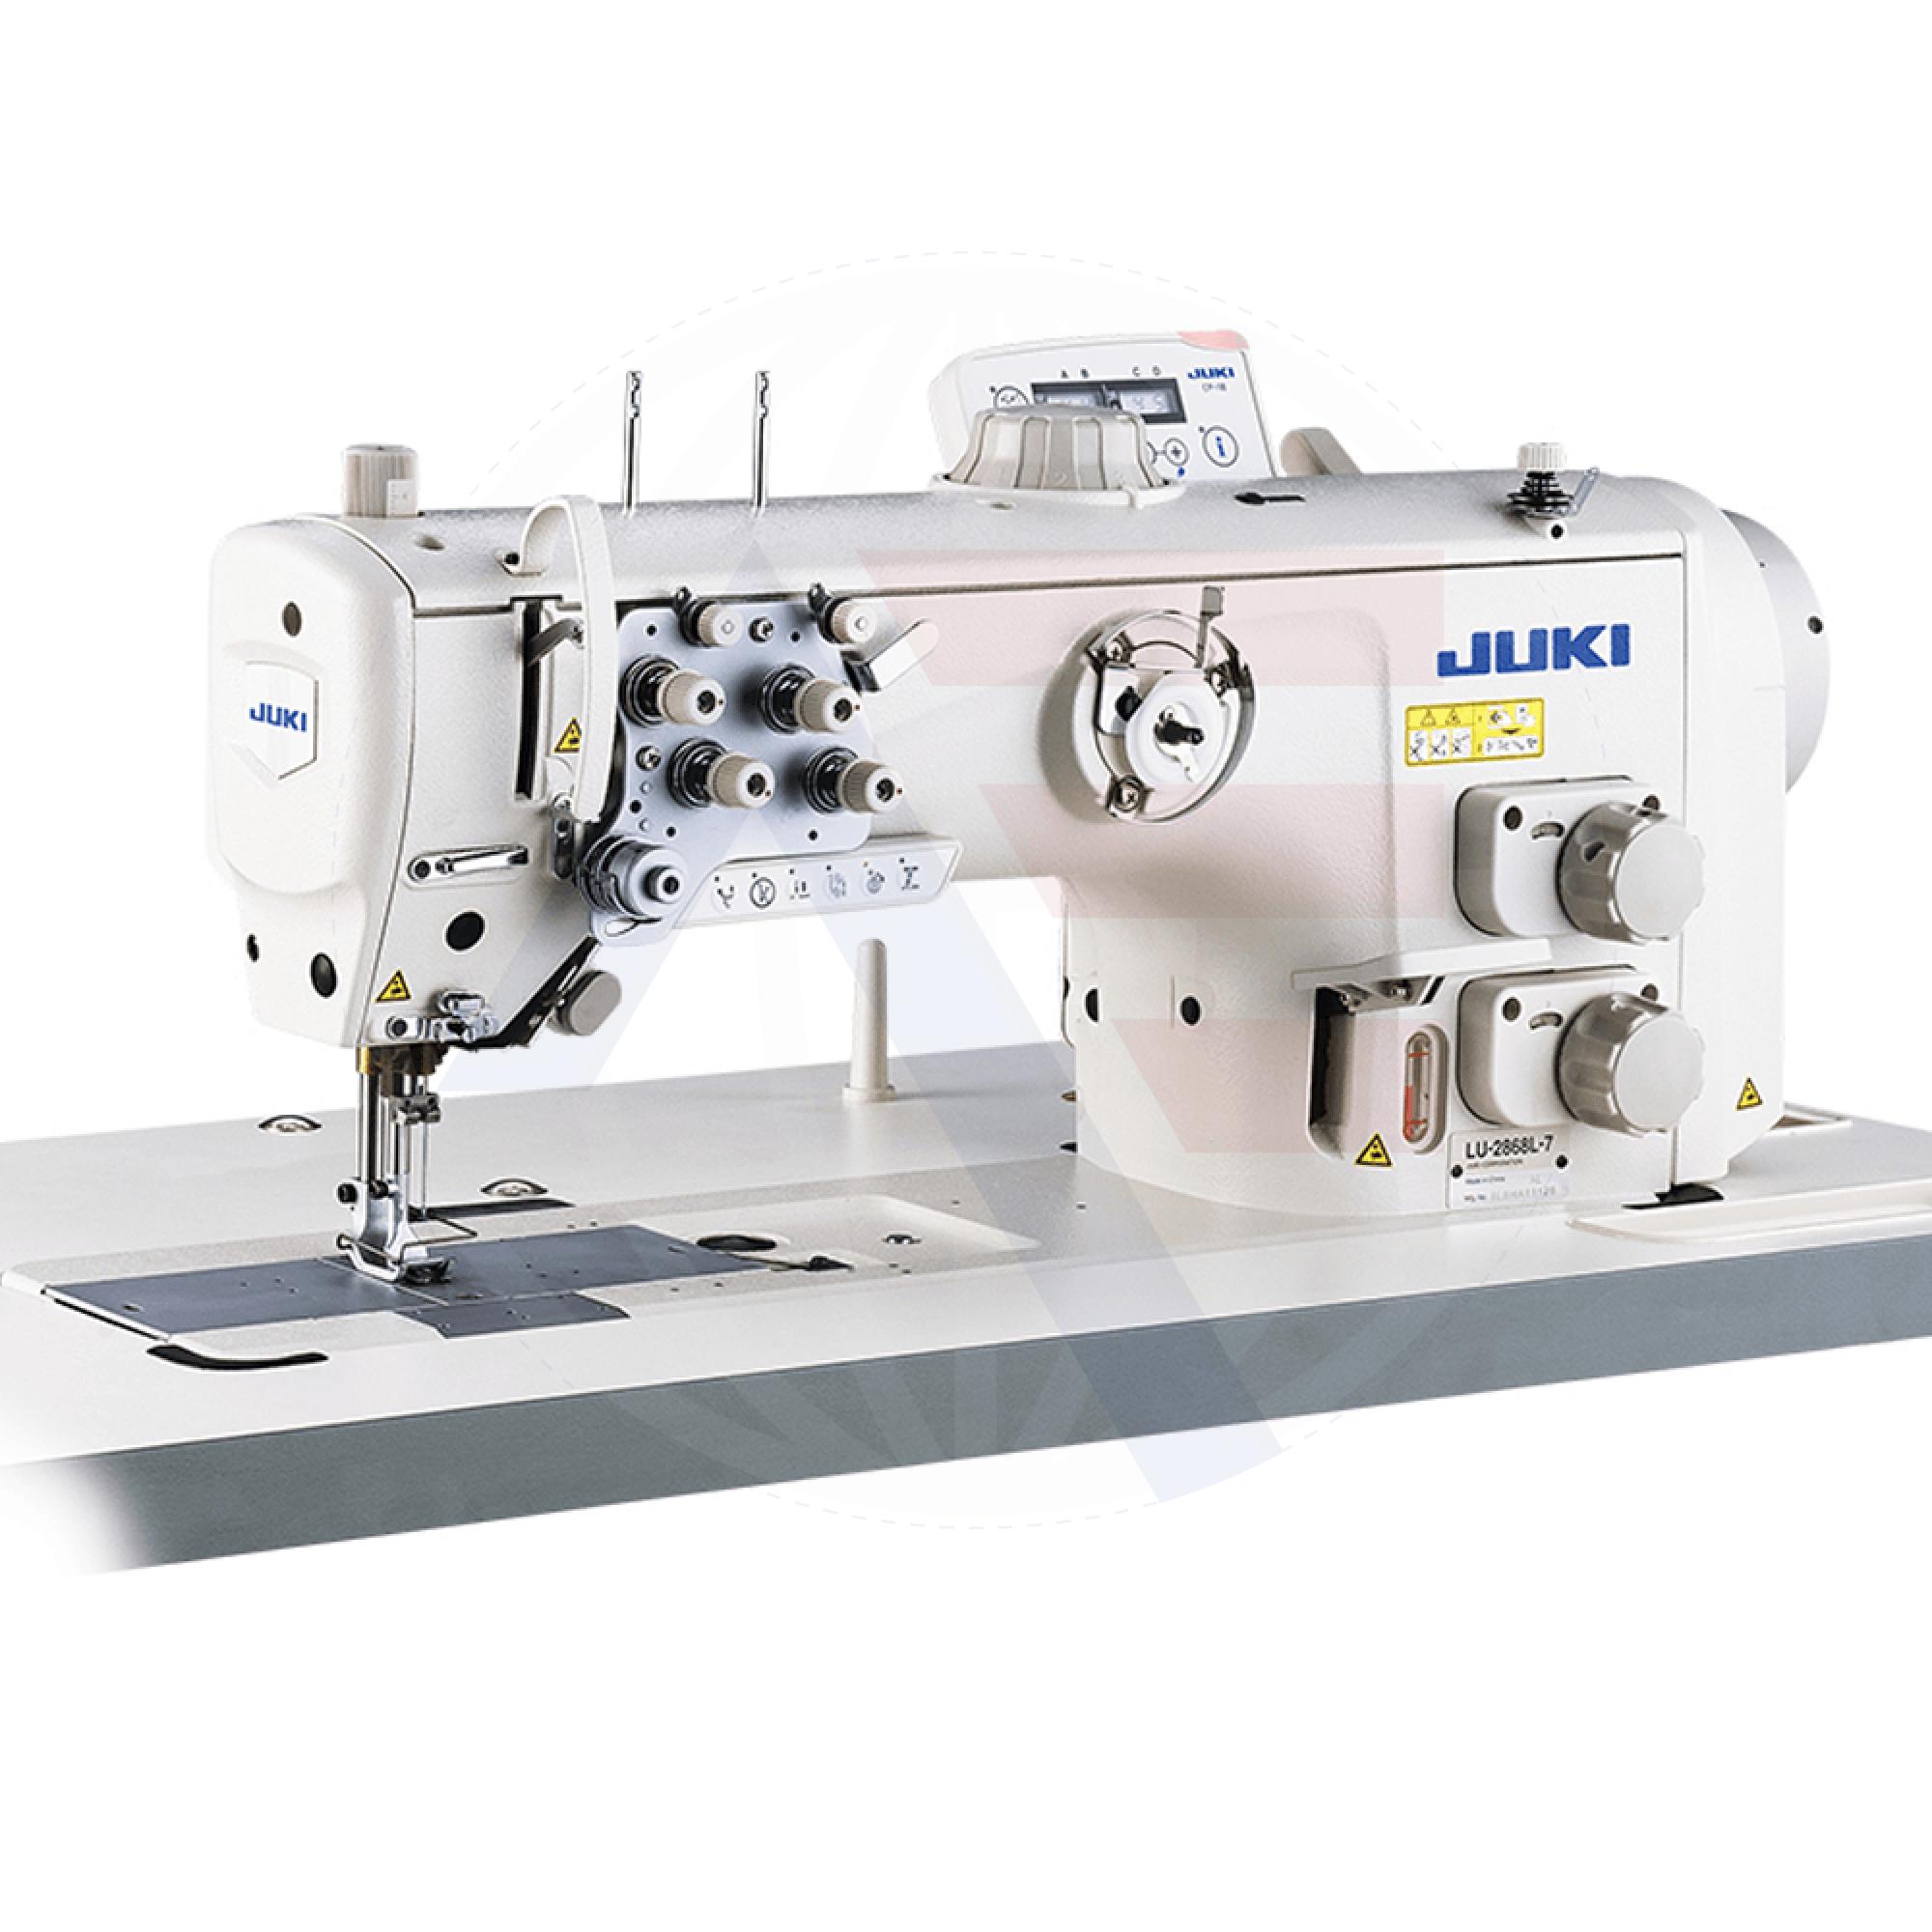 Juki Lu-2860-7 2-Needle Walking-Foot Machine (Auto-Functions) Sewing Machines